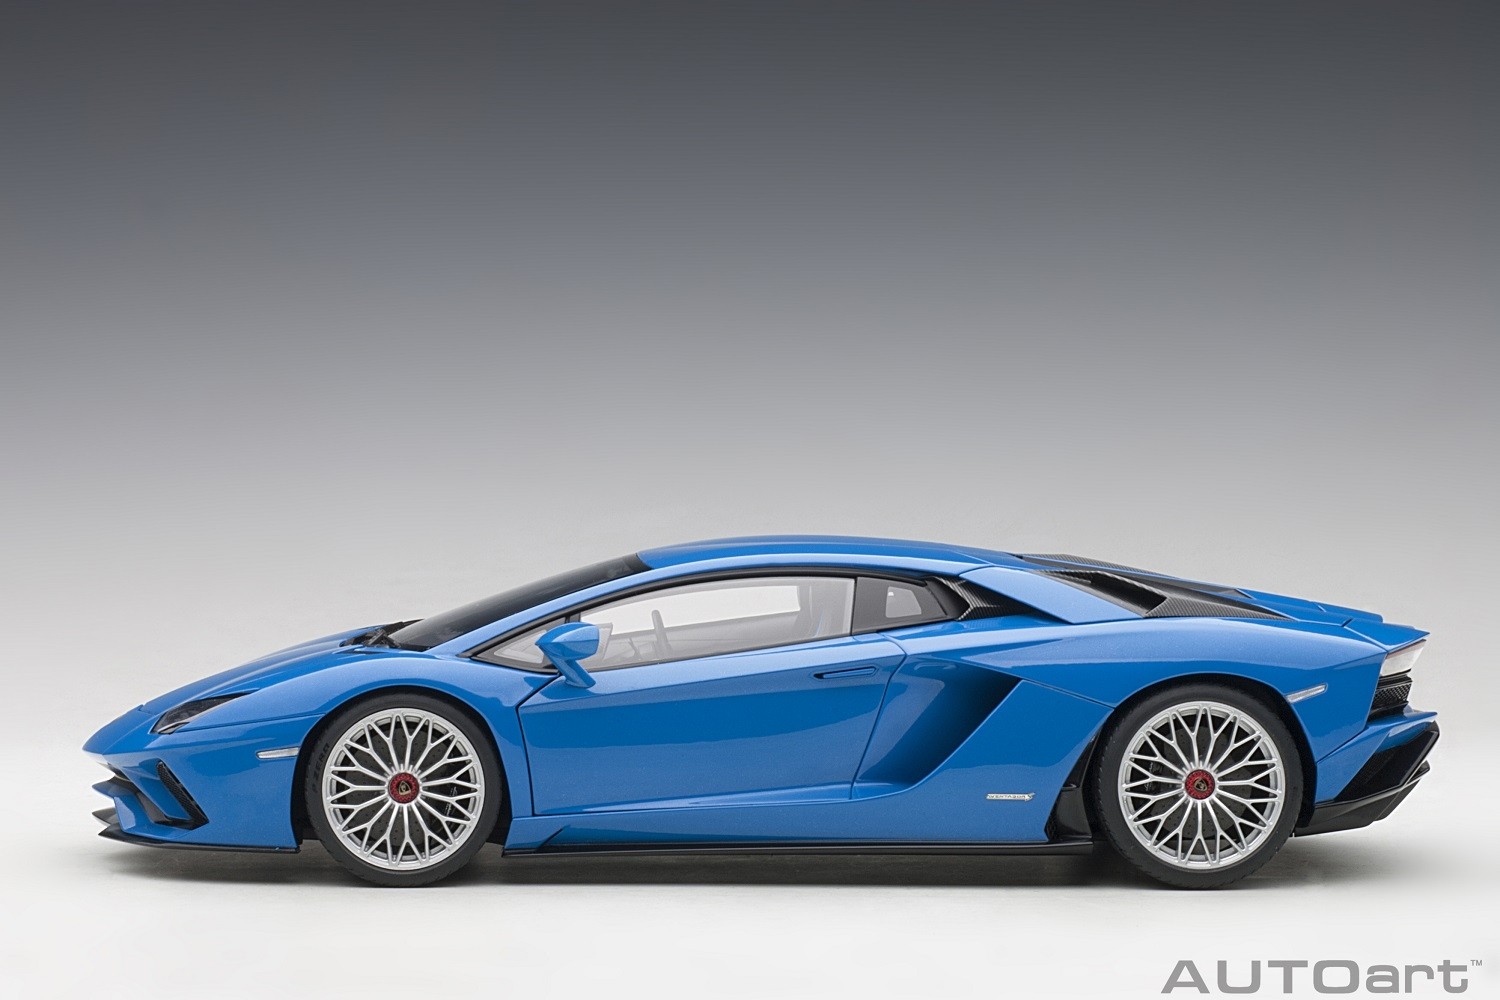 LAMBORGHINI AVENTADOR S BLU NILA/ PEARL BLUE 1/18 MODEL CAR BY AUTOART 79134 